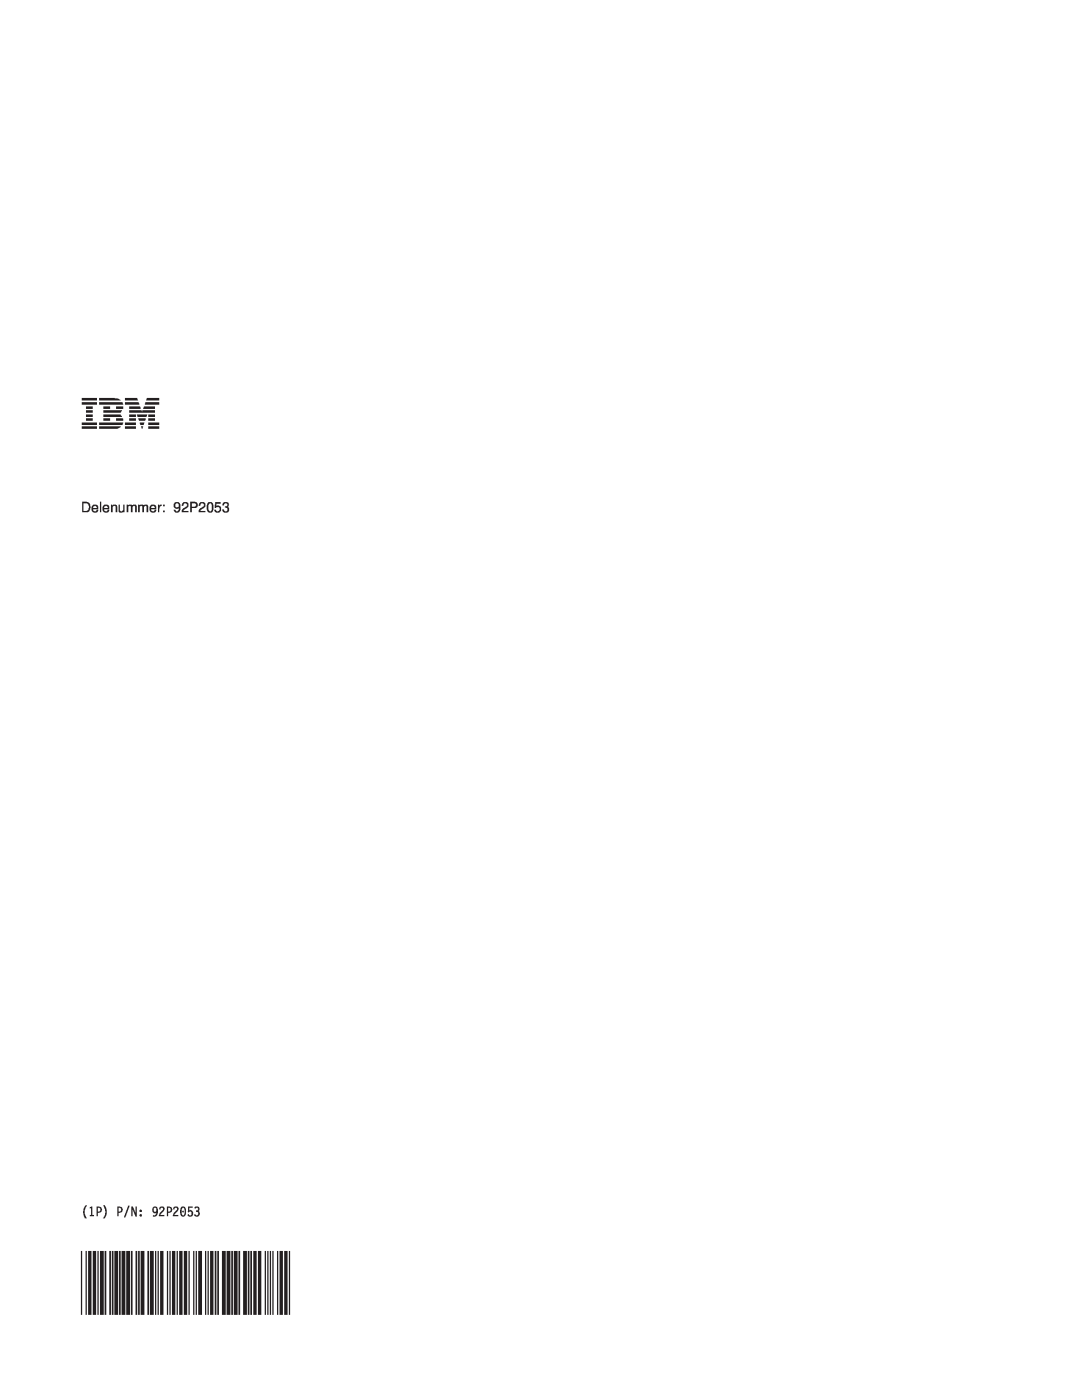 IBM R50 manual Delenummer 92P2053, 1P P/N 92P2053 